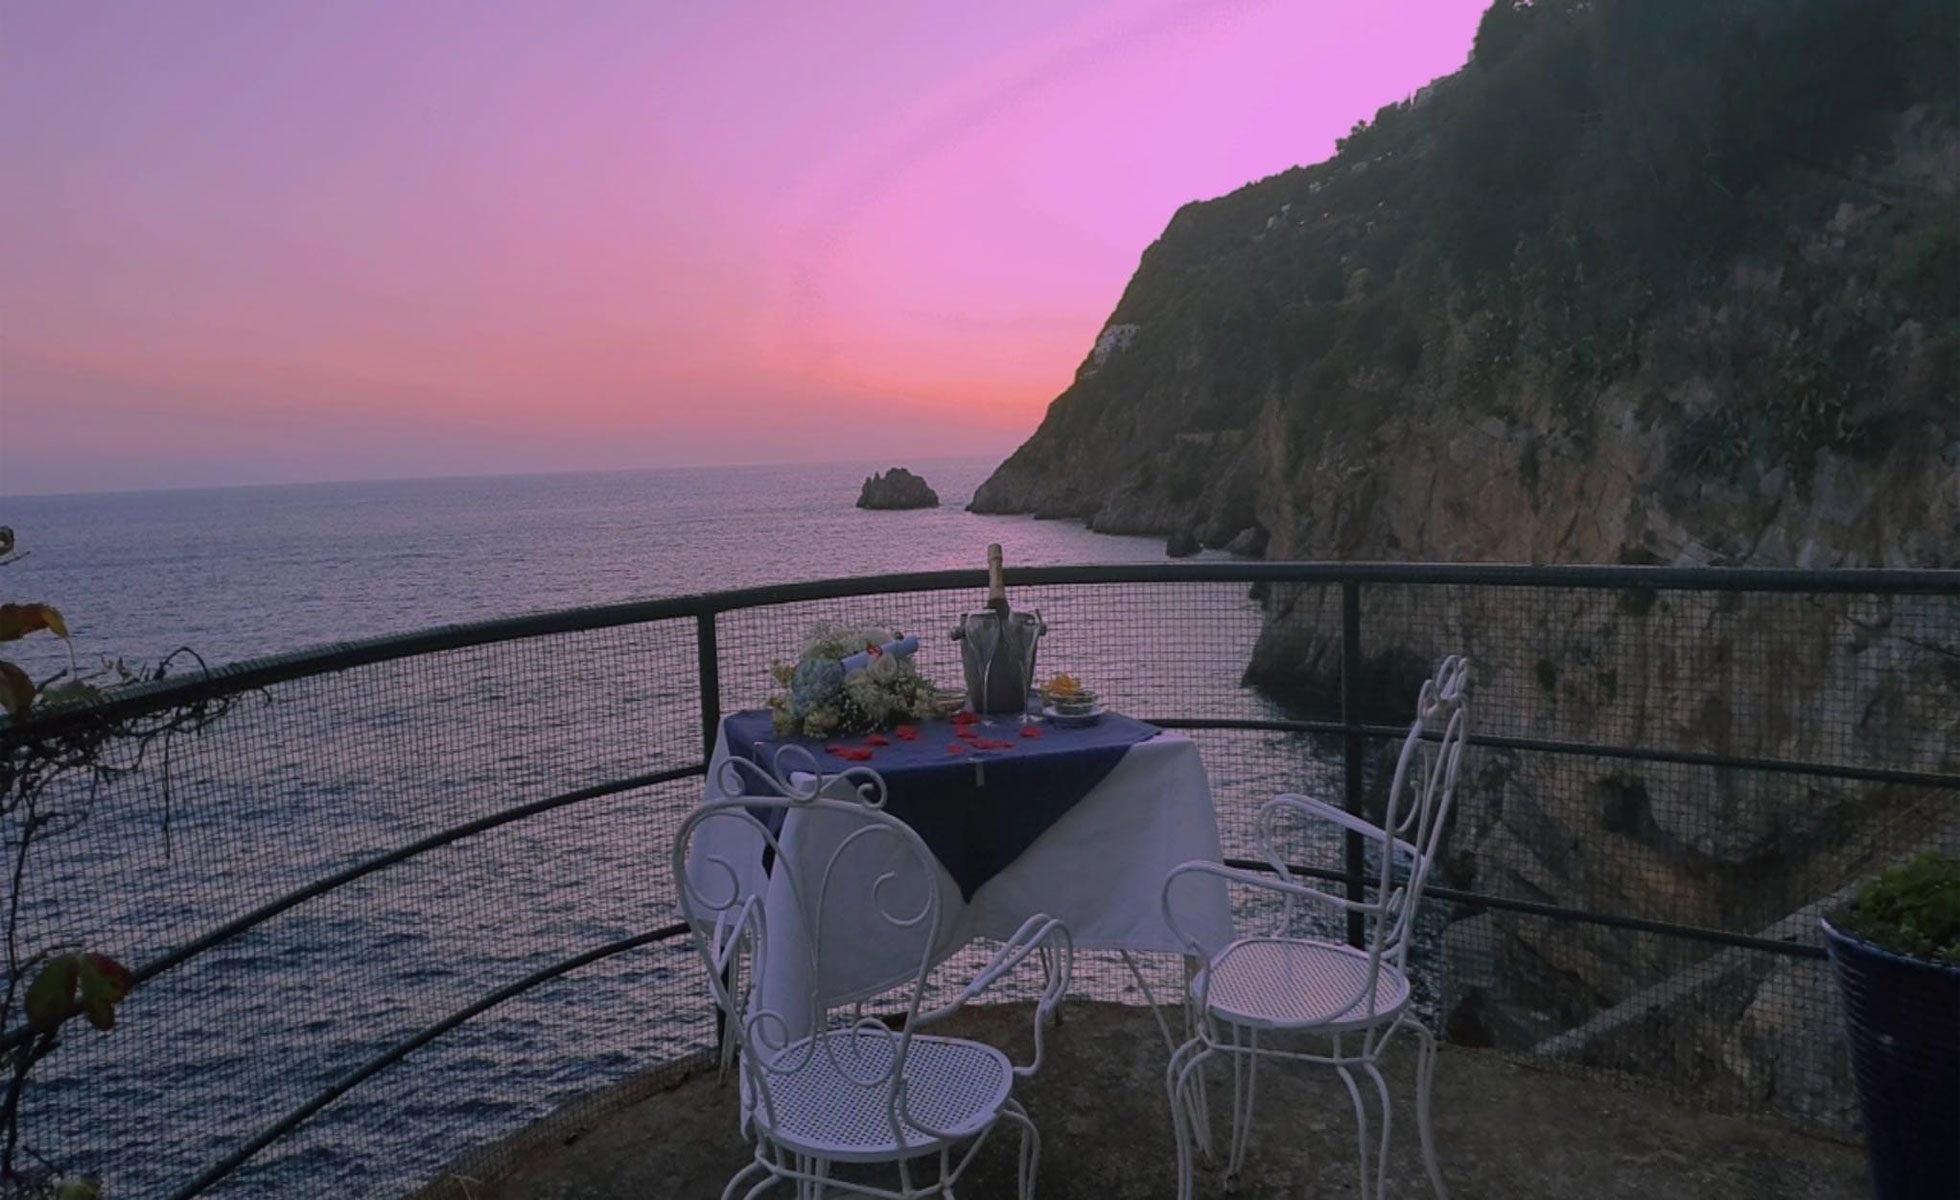 Idee per un romantica vacanza in Costa d’Amalfi!